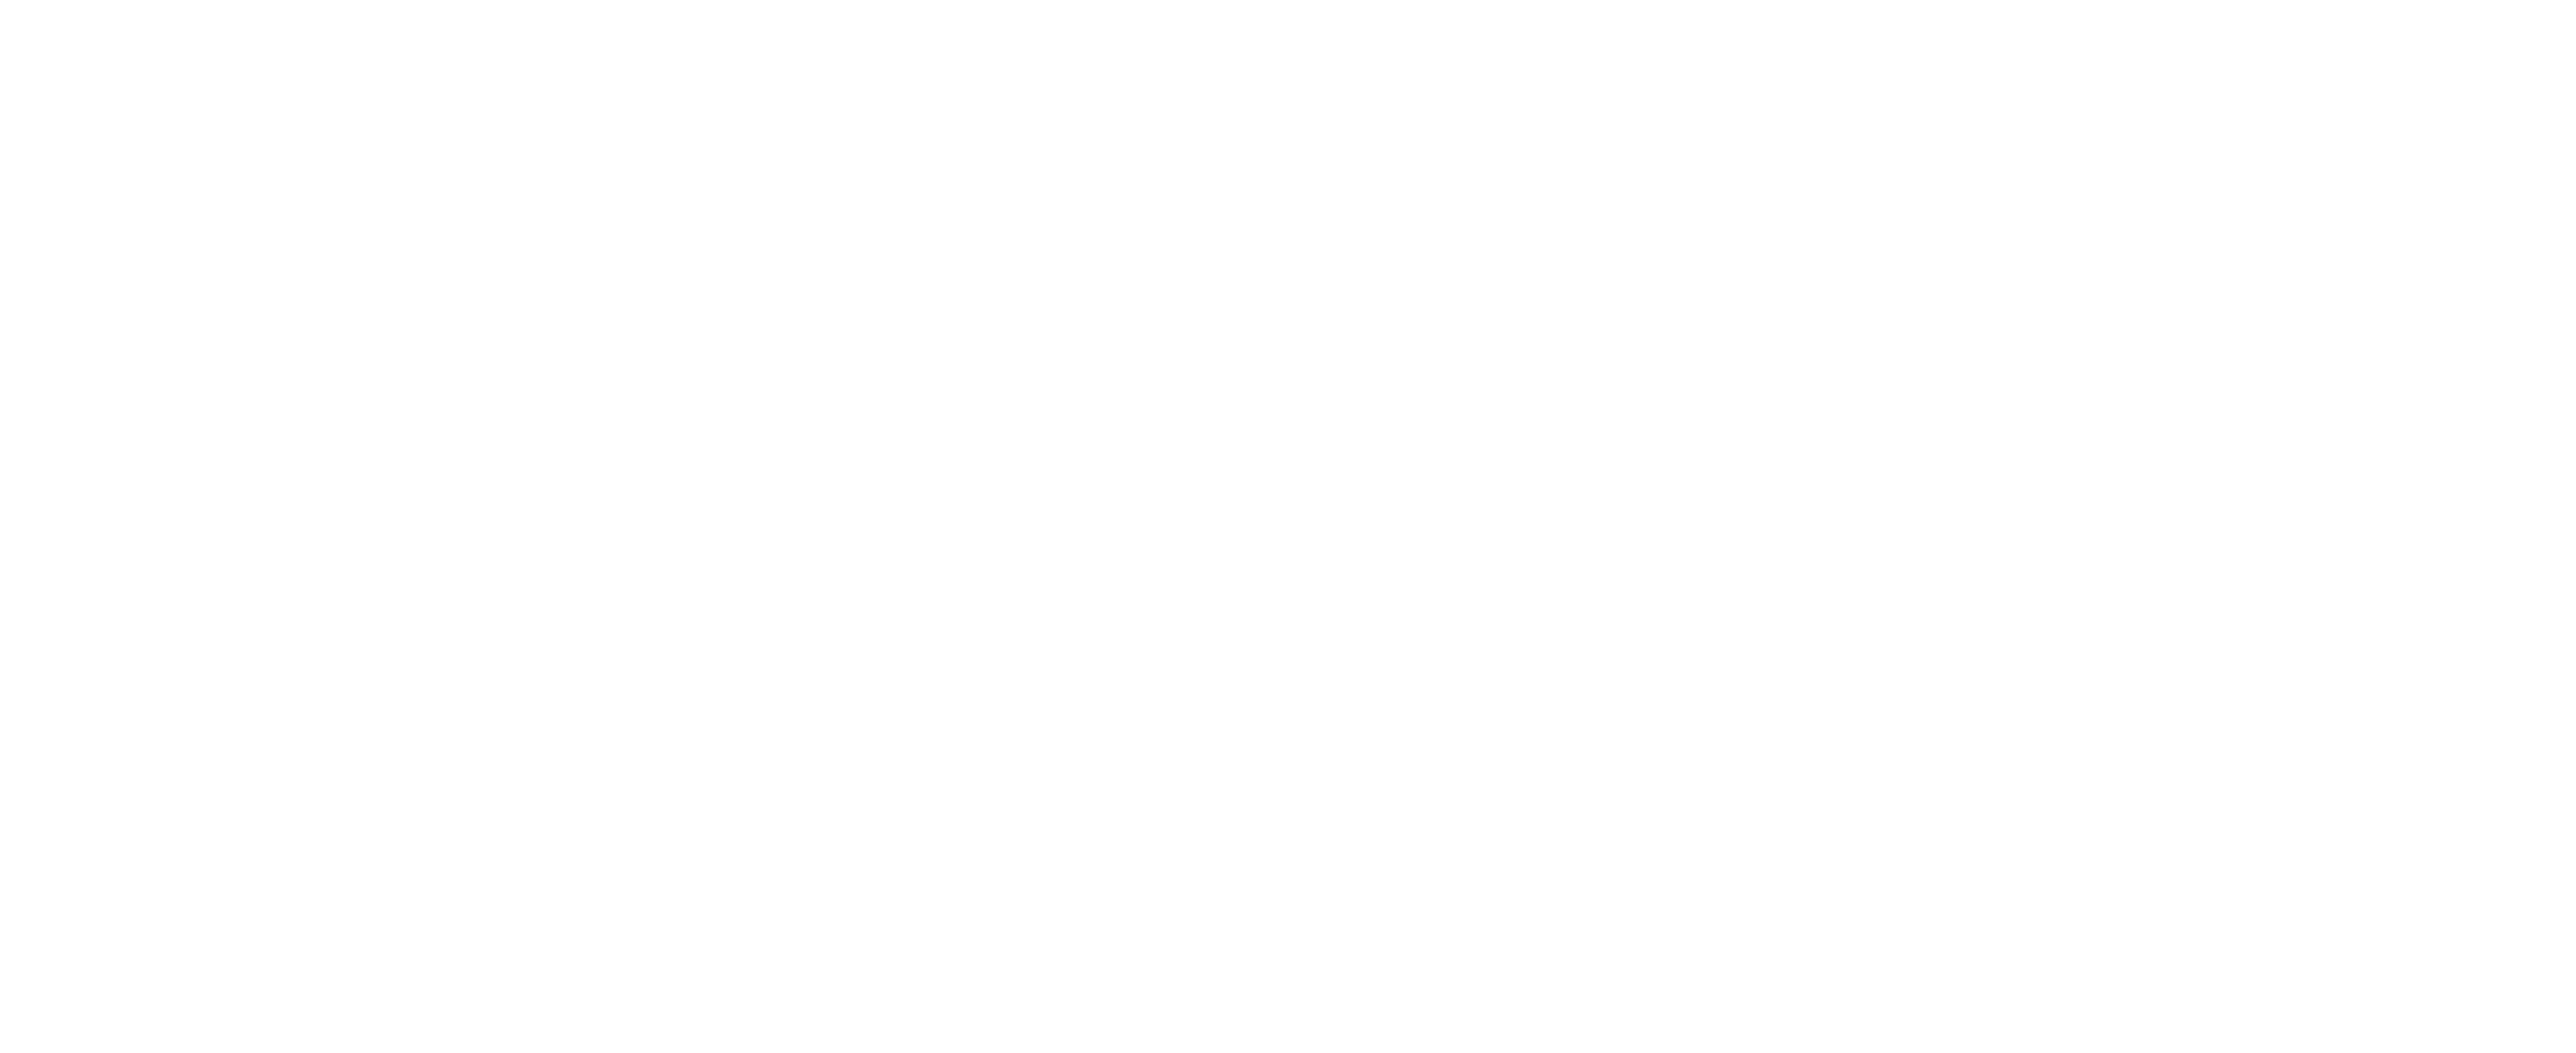 Property Management Expert Group